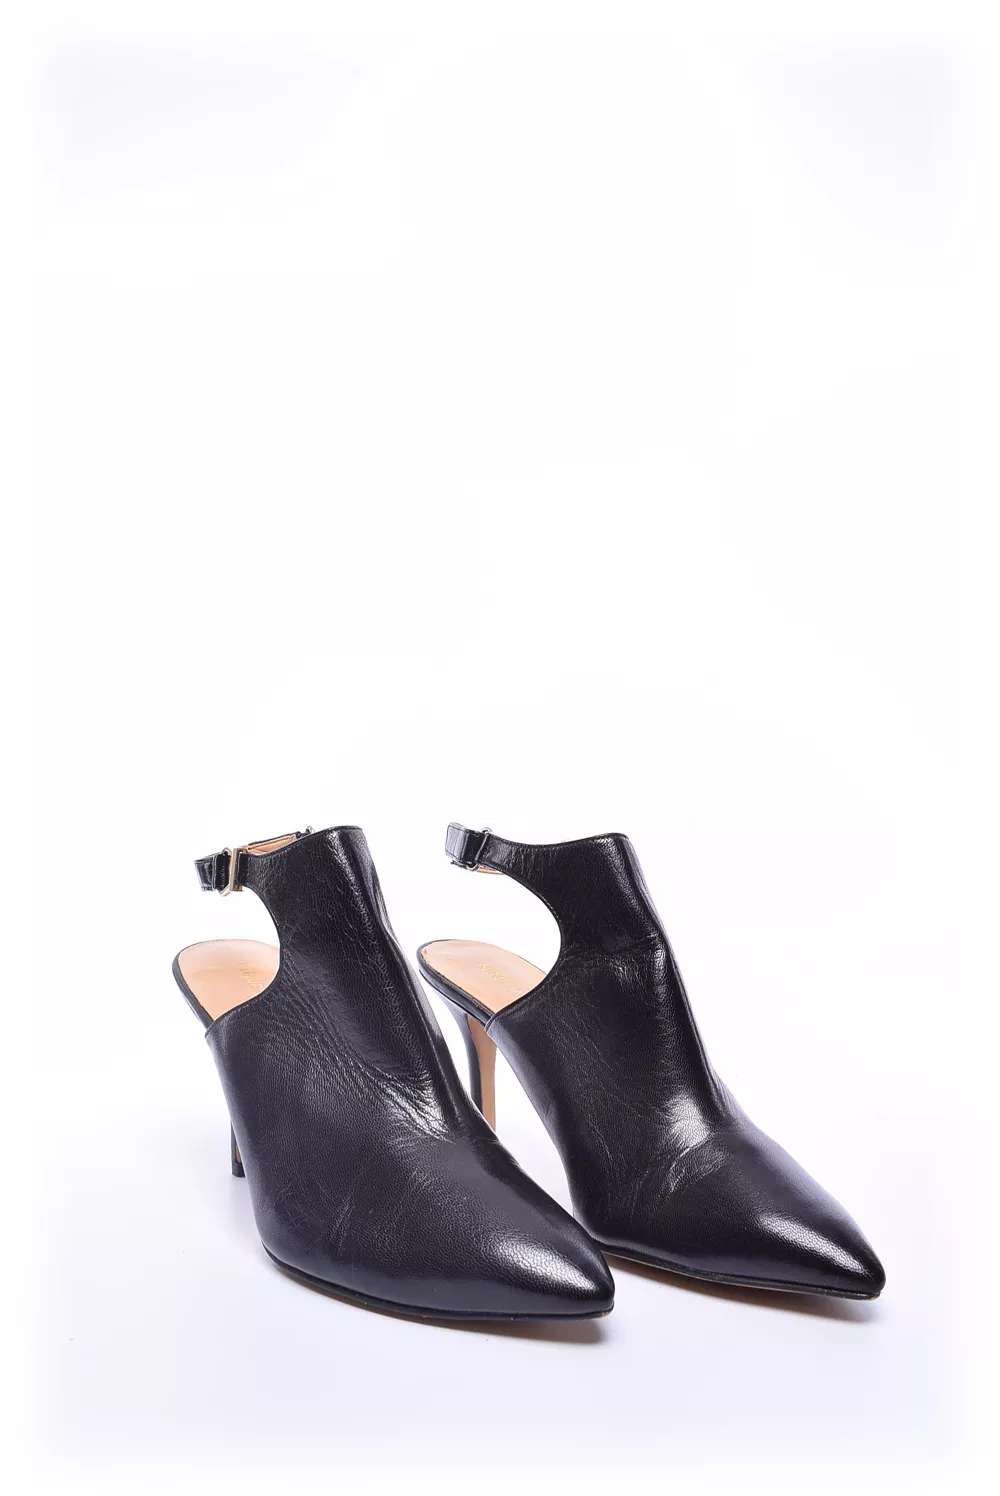 Sandale stiletto dama [3]